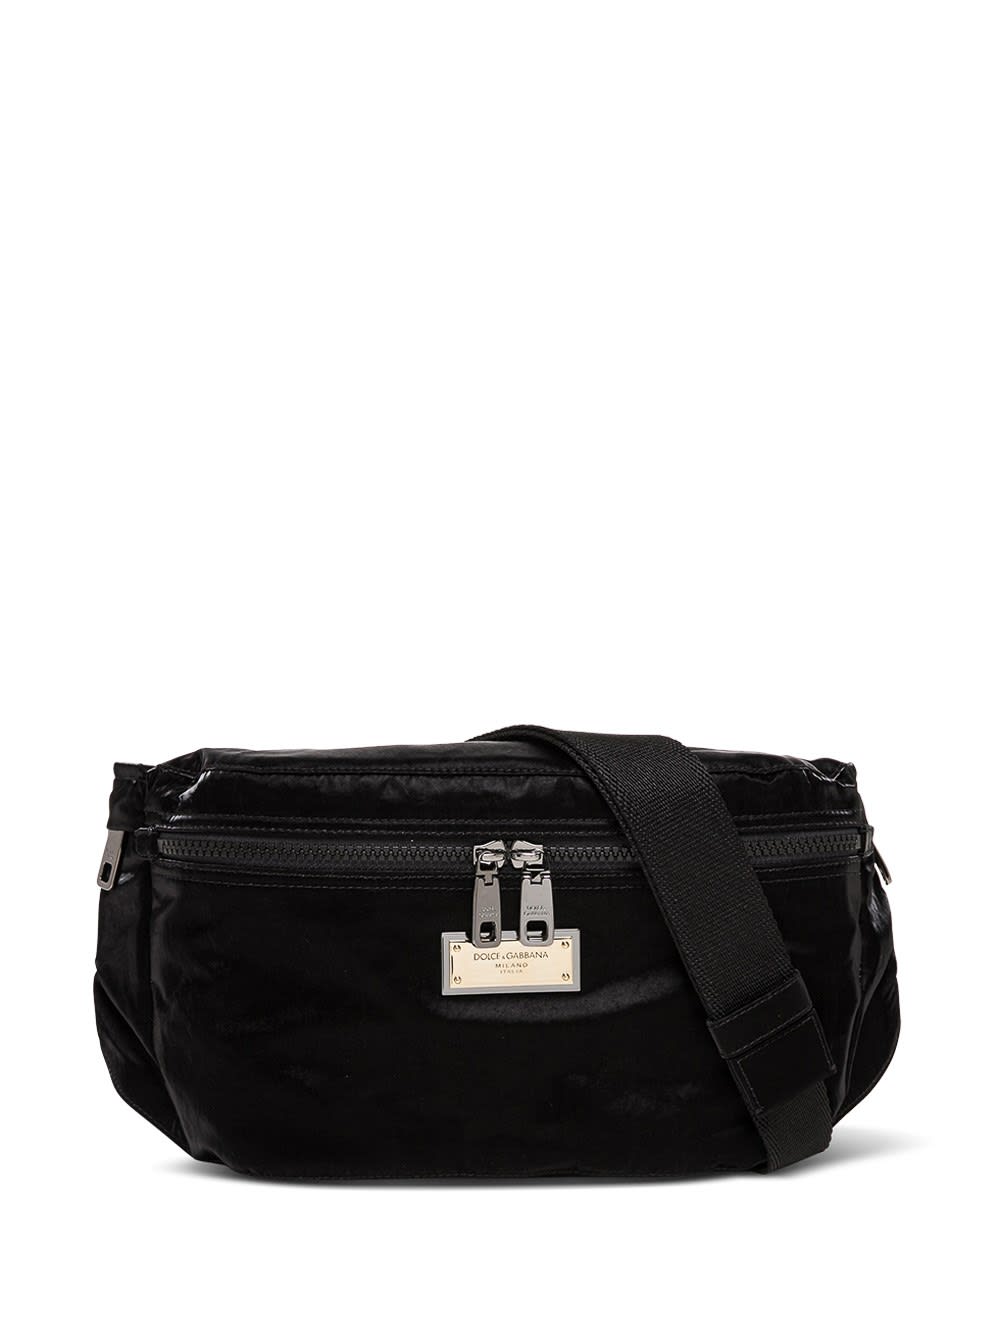 Dolce & Gabbana Sicily Black Waist Bag In Nylon